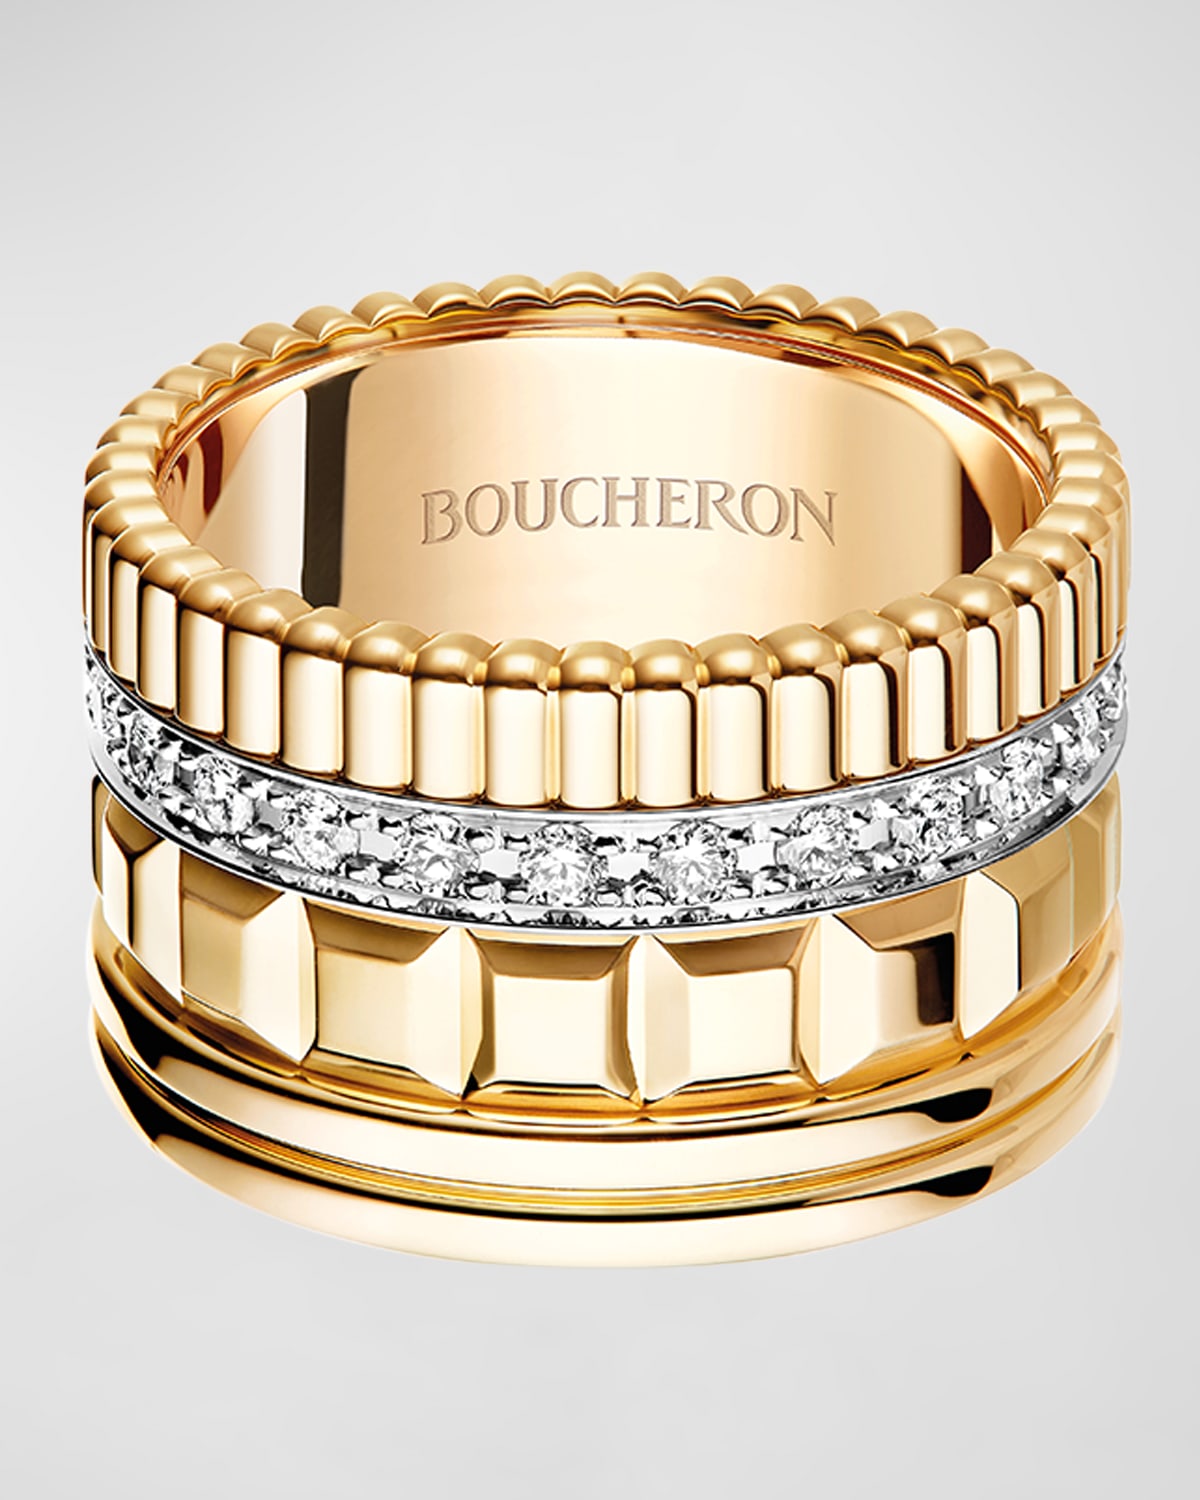 Boucheron Quatre 18K Yellow Gold Ring with Diamonds, Size 54